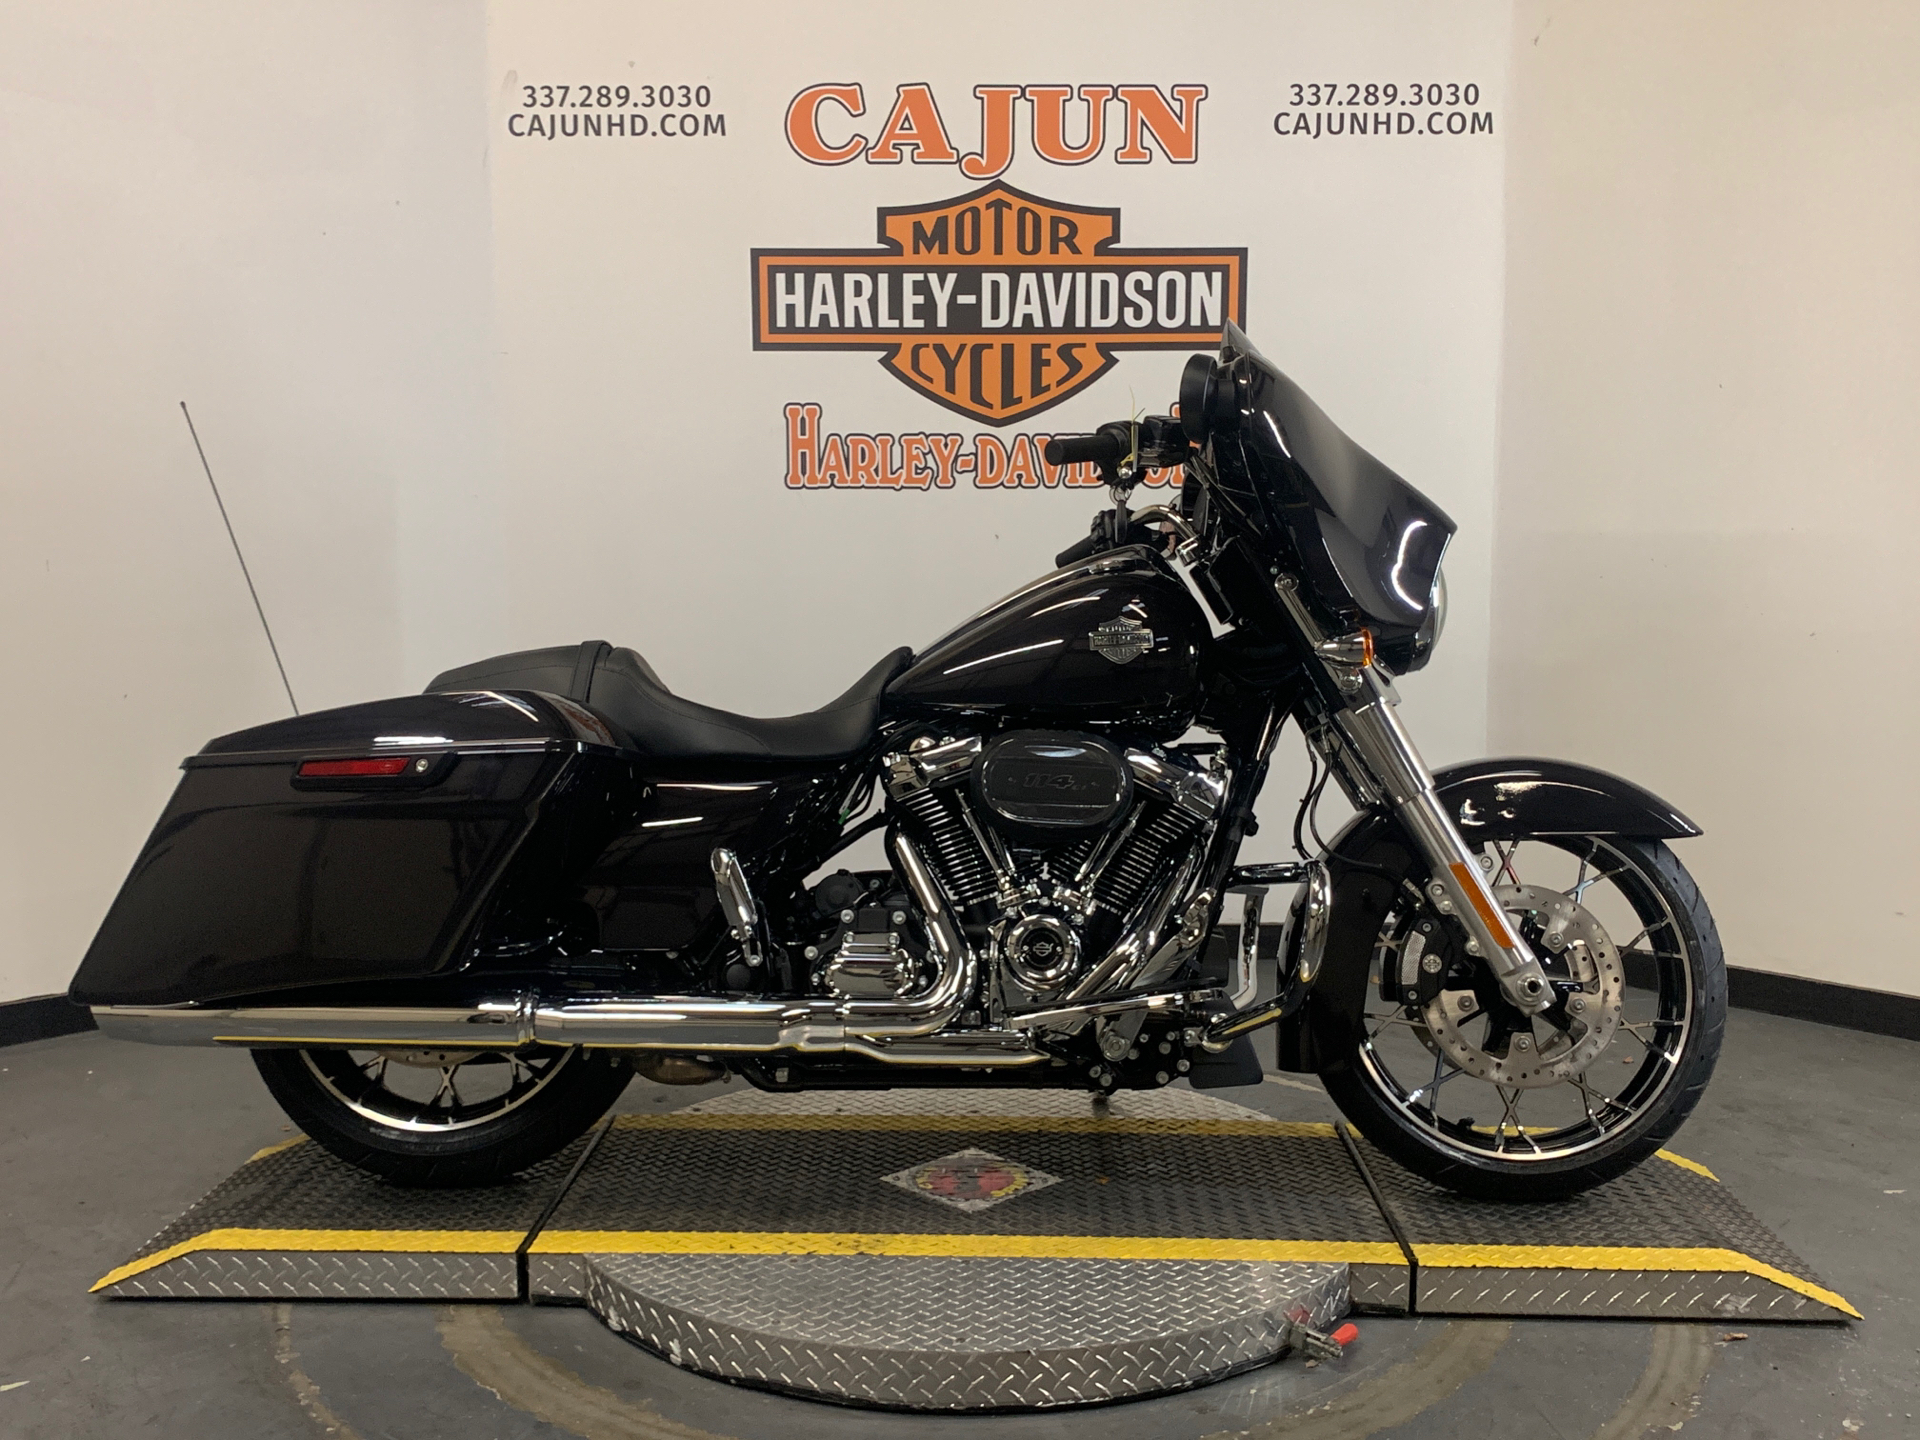 New 2021 Harley Davidson Street Glide Special Black Jack Metallic Chrome Option Motorcycles In Scott La 609307